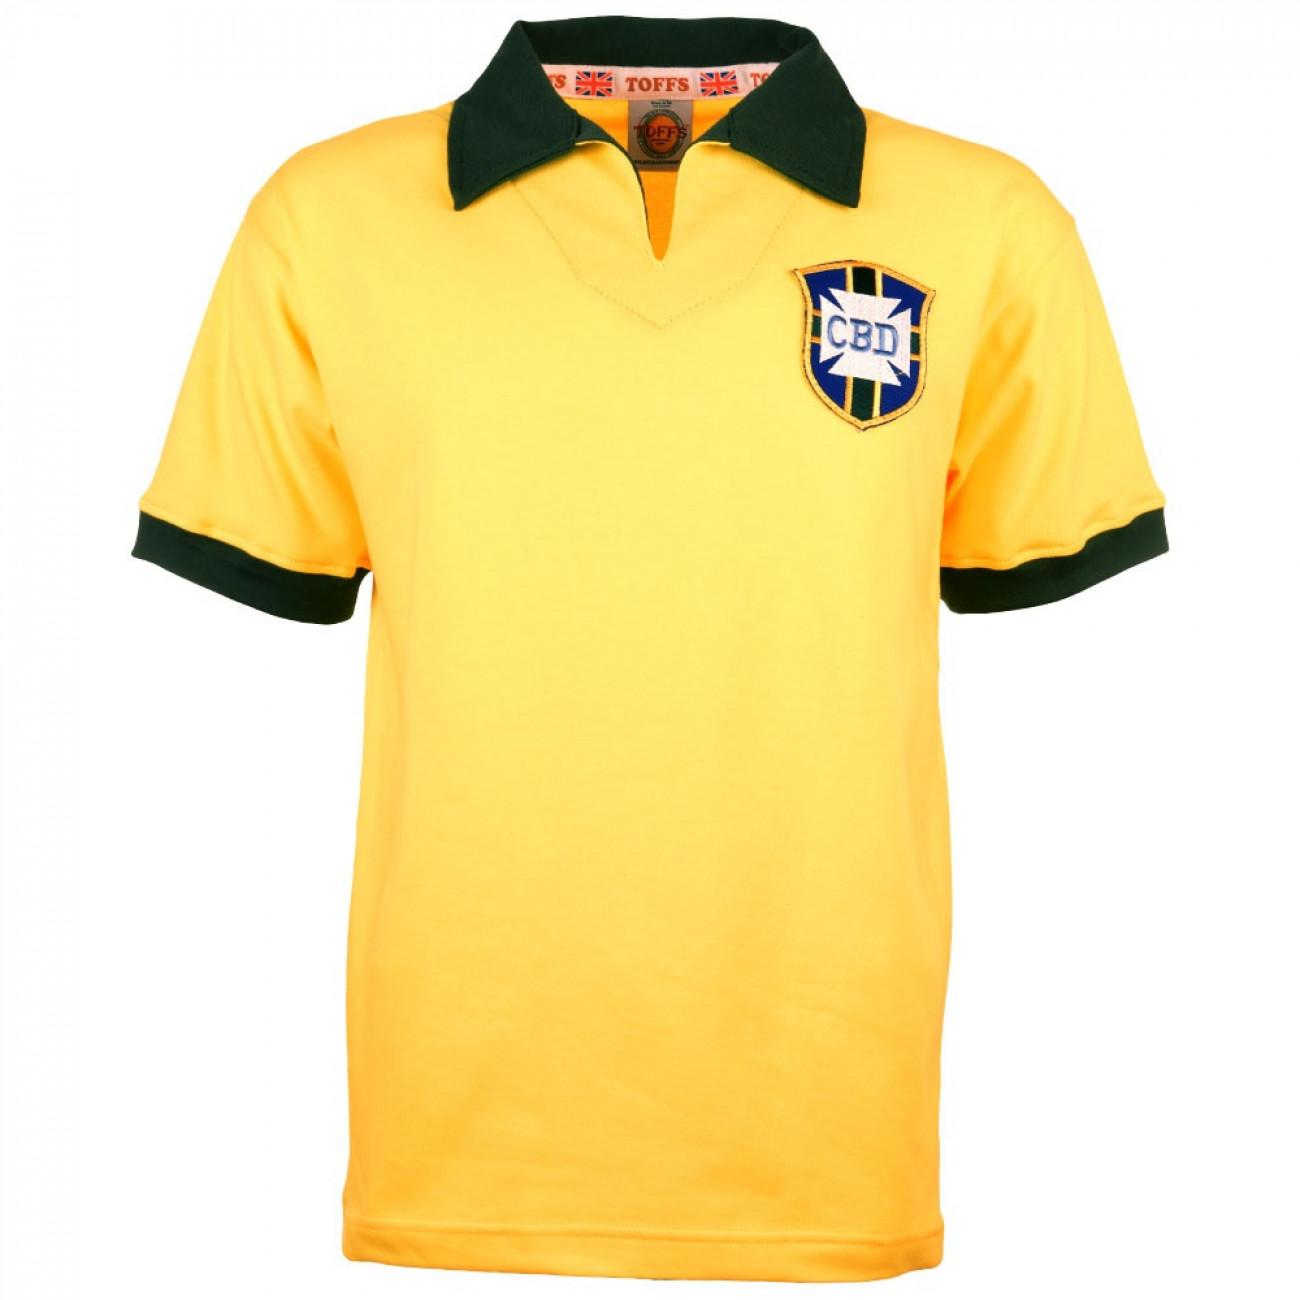 National Team Vintage Football shirt, retro soccer jersey, Brazil